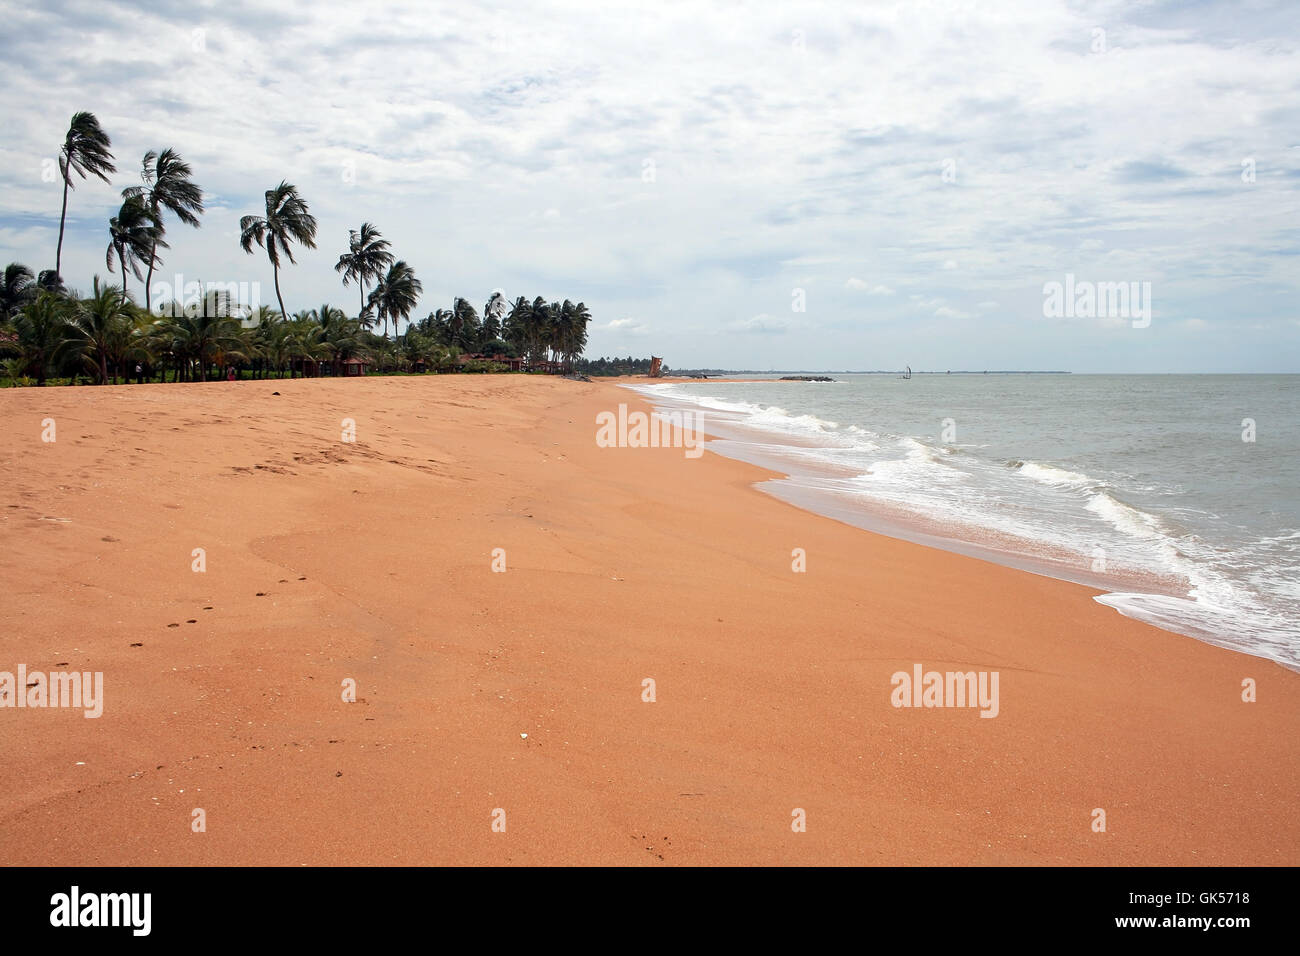 on the sandy beach of sri lanka Stock Photo